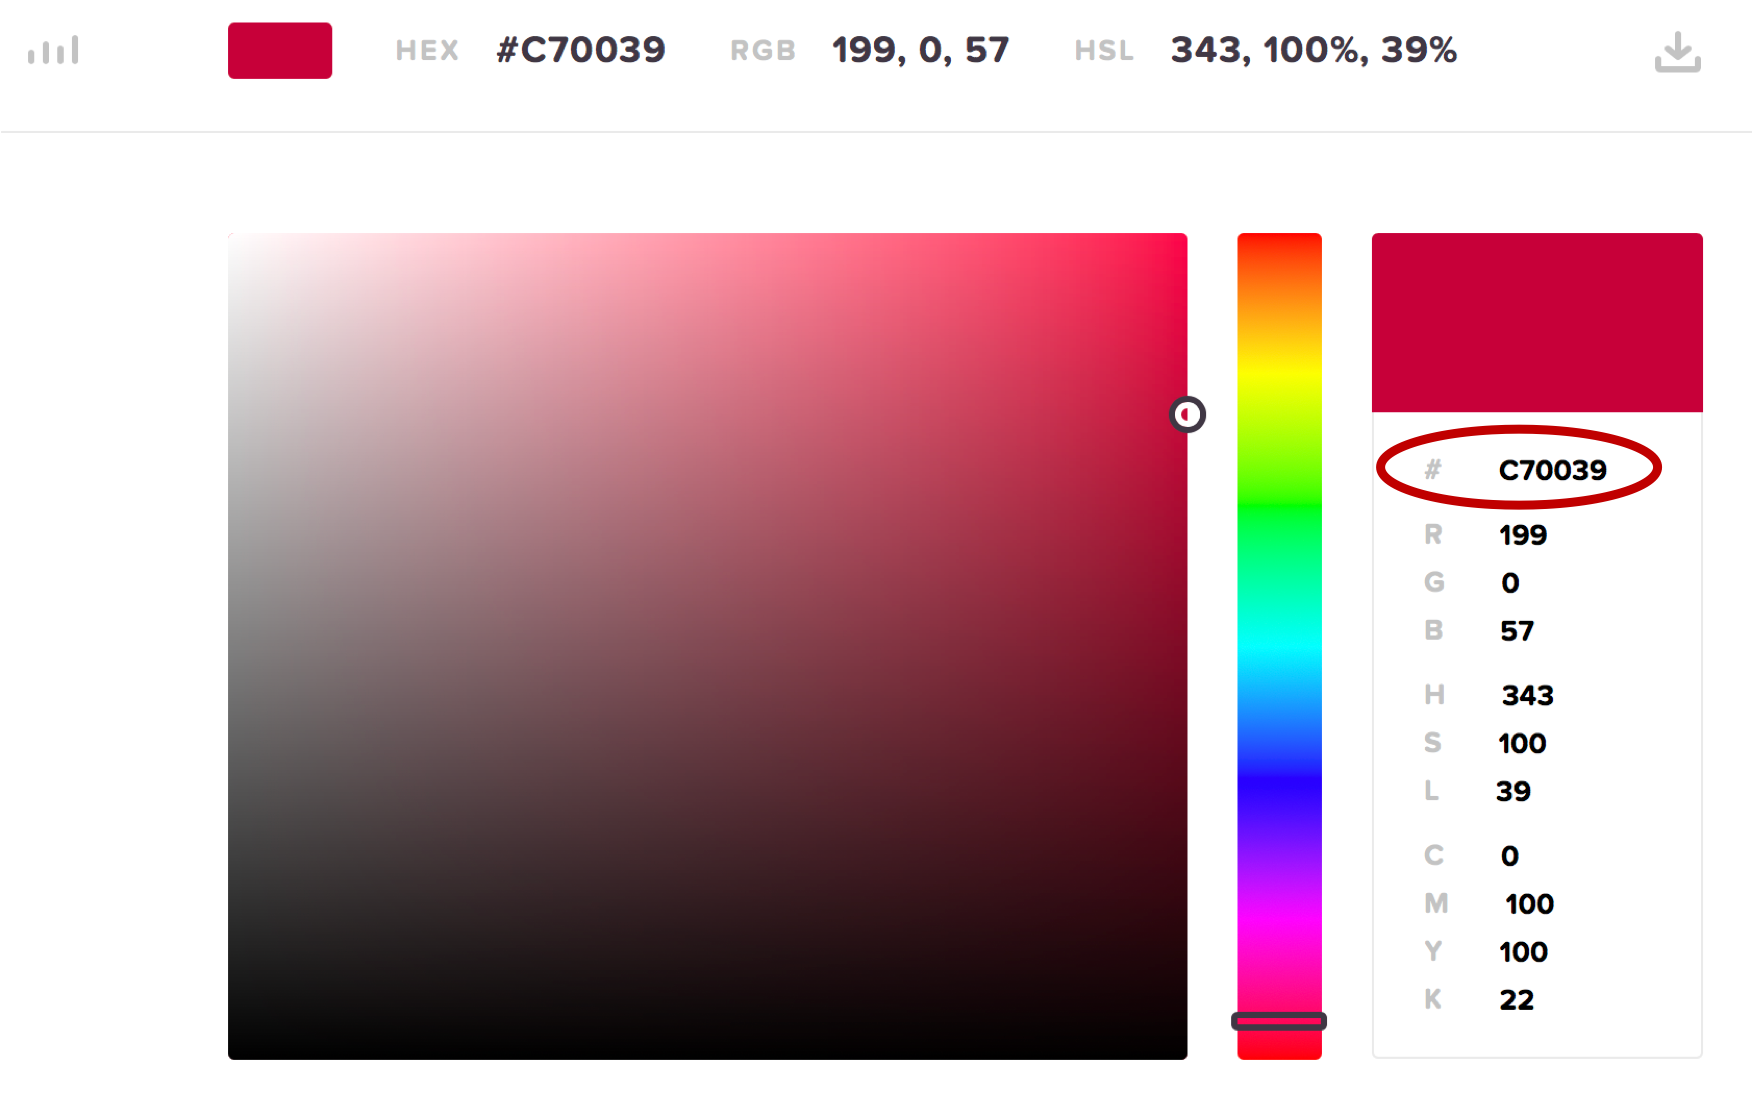 Hex colour picker screenshot